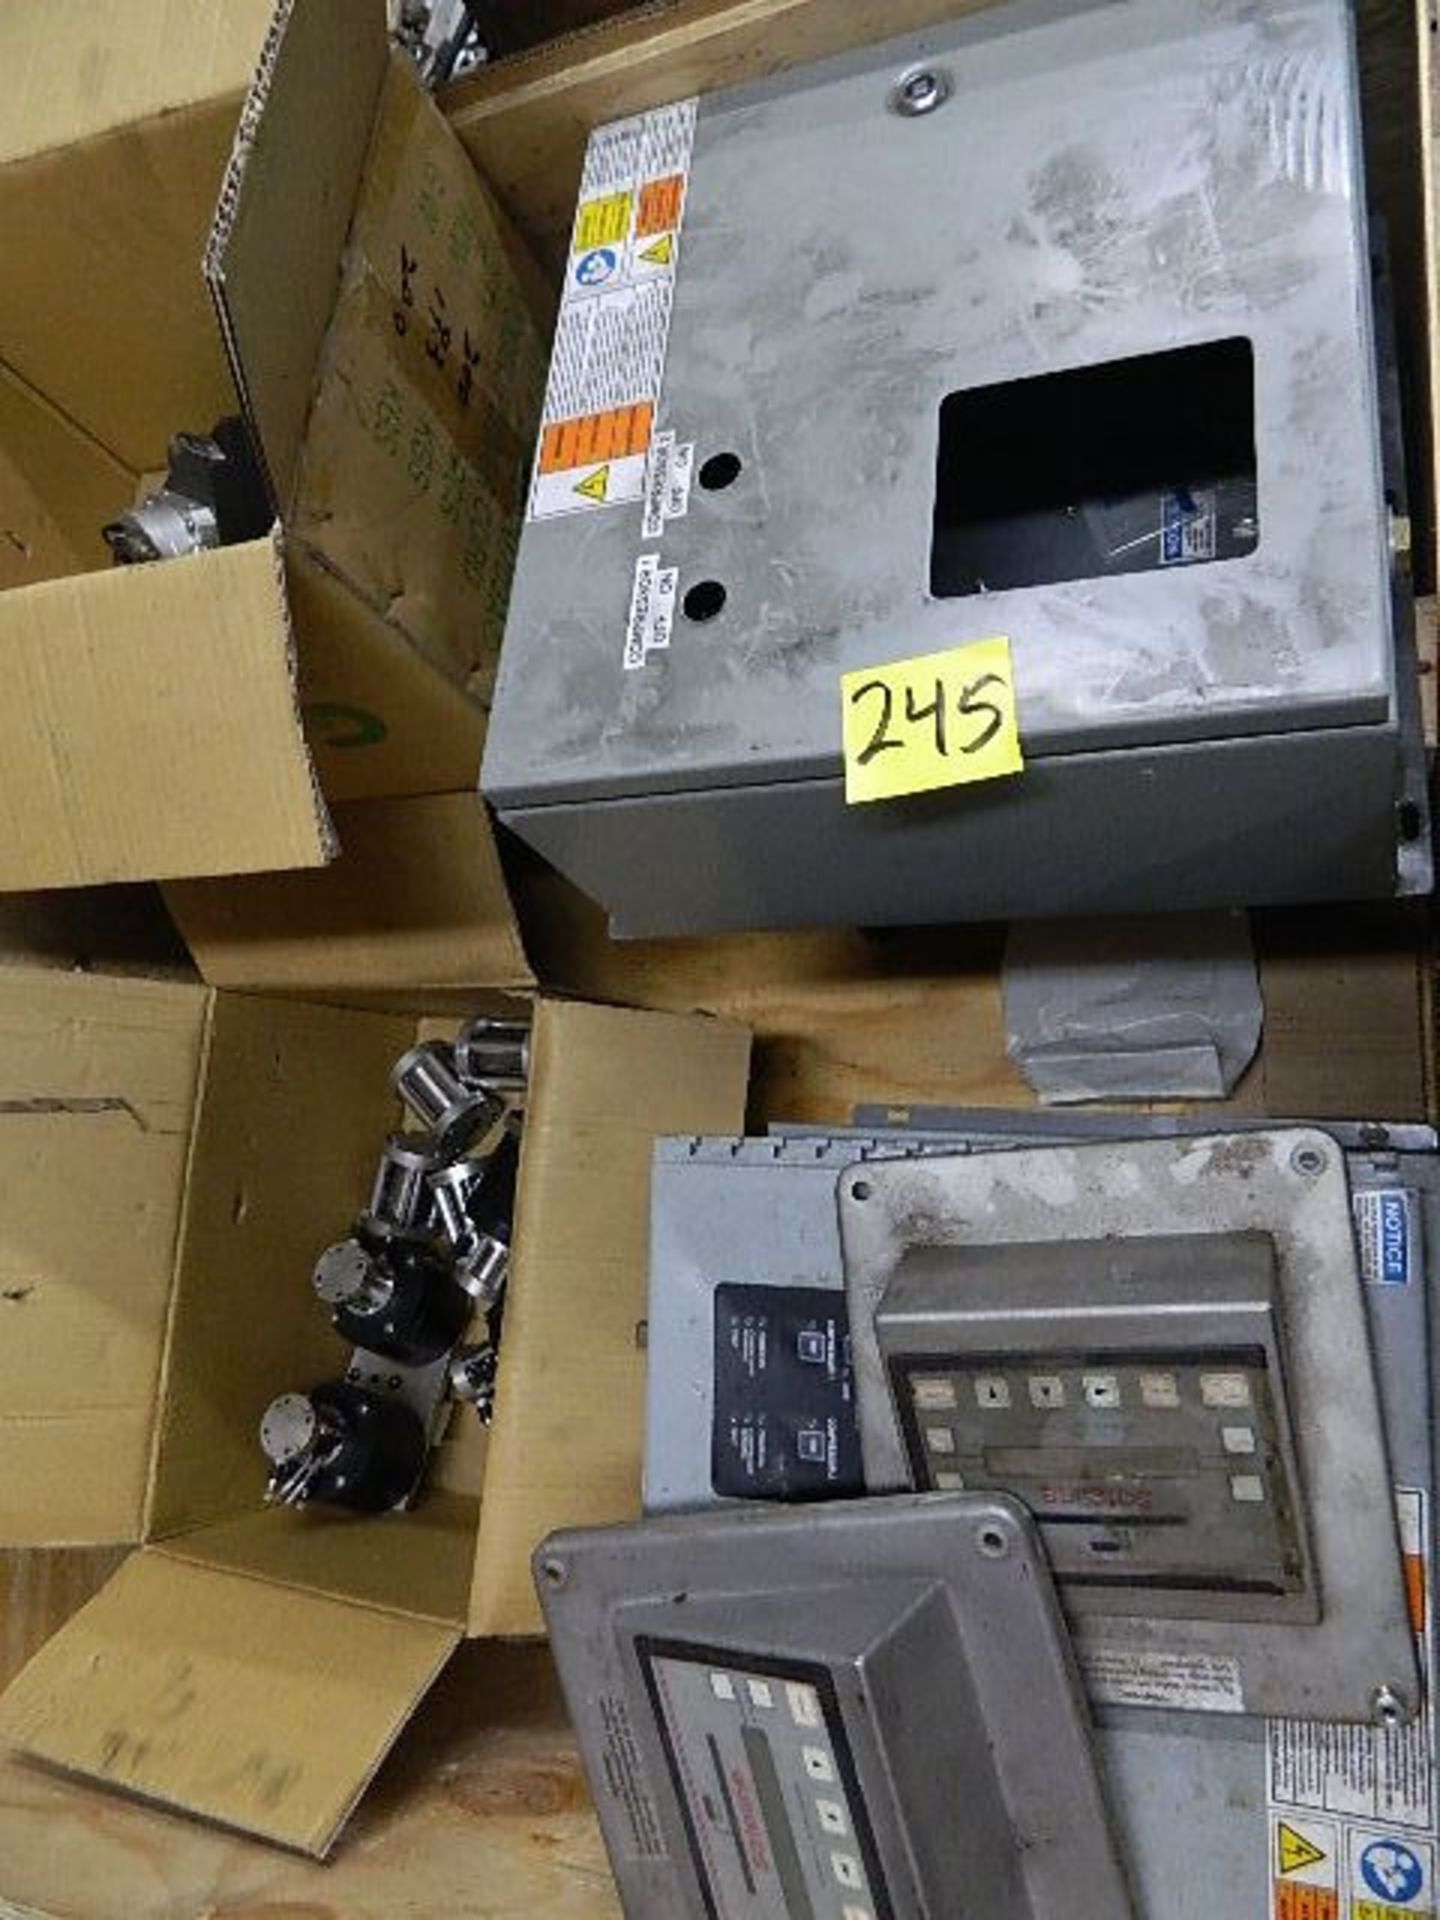 Electrical. Lot (3) Electrical Control Boxes, (2) Safeline Controls, (6) Pneumatic Gear Controls